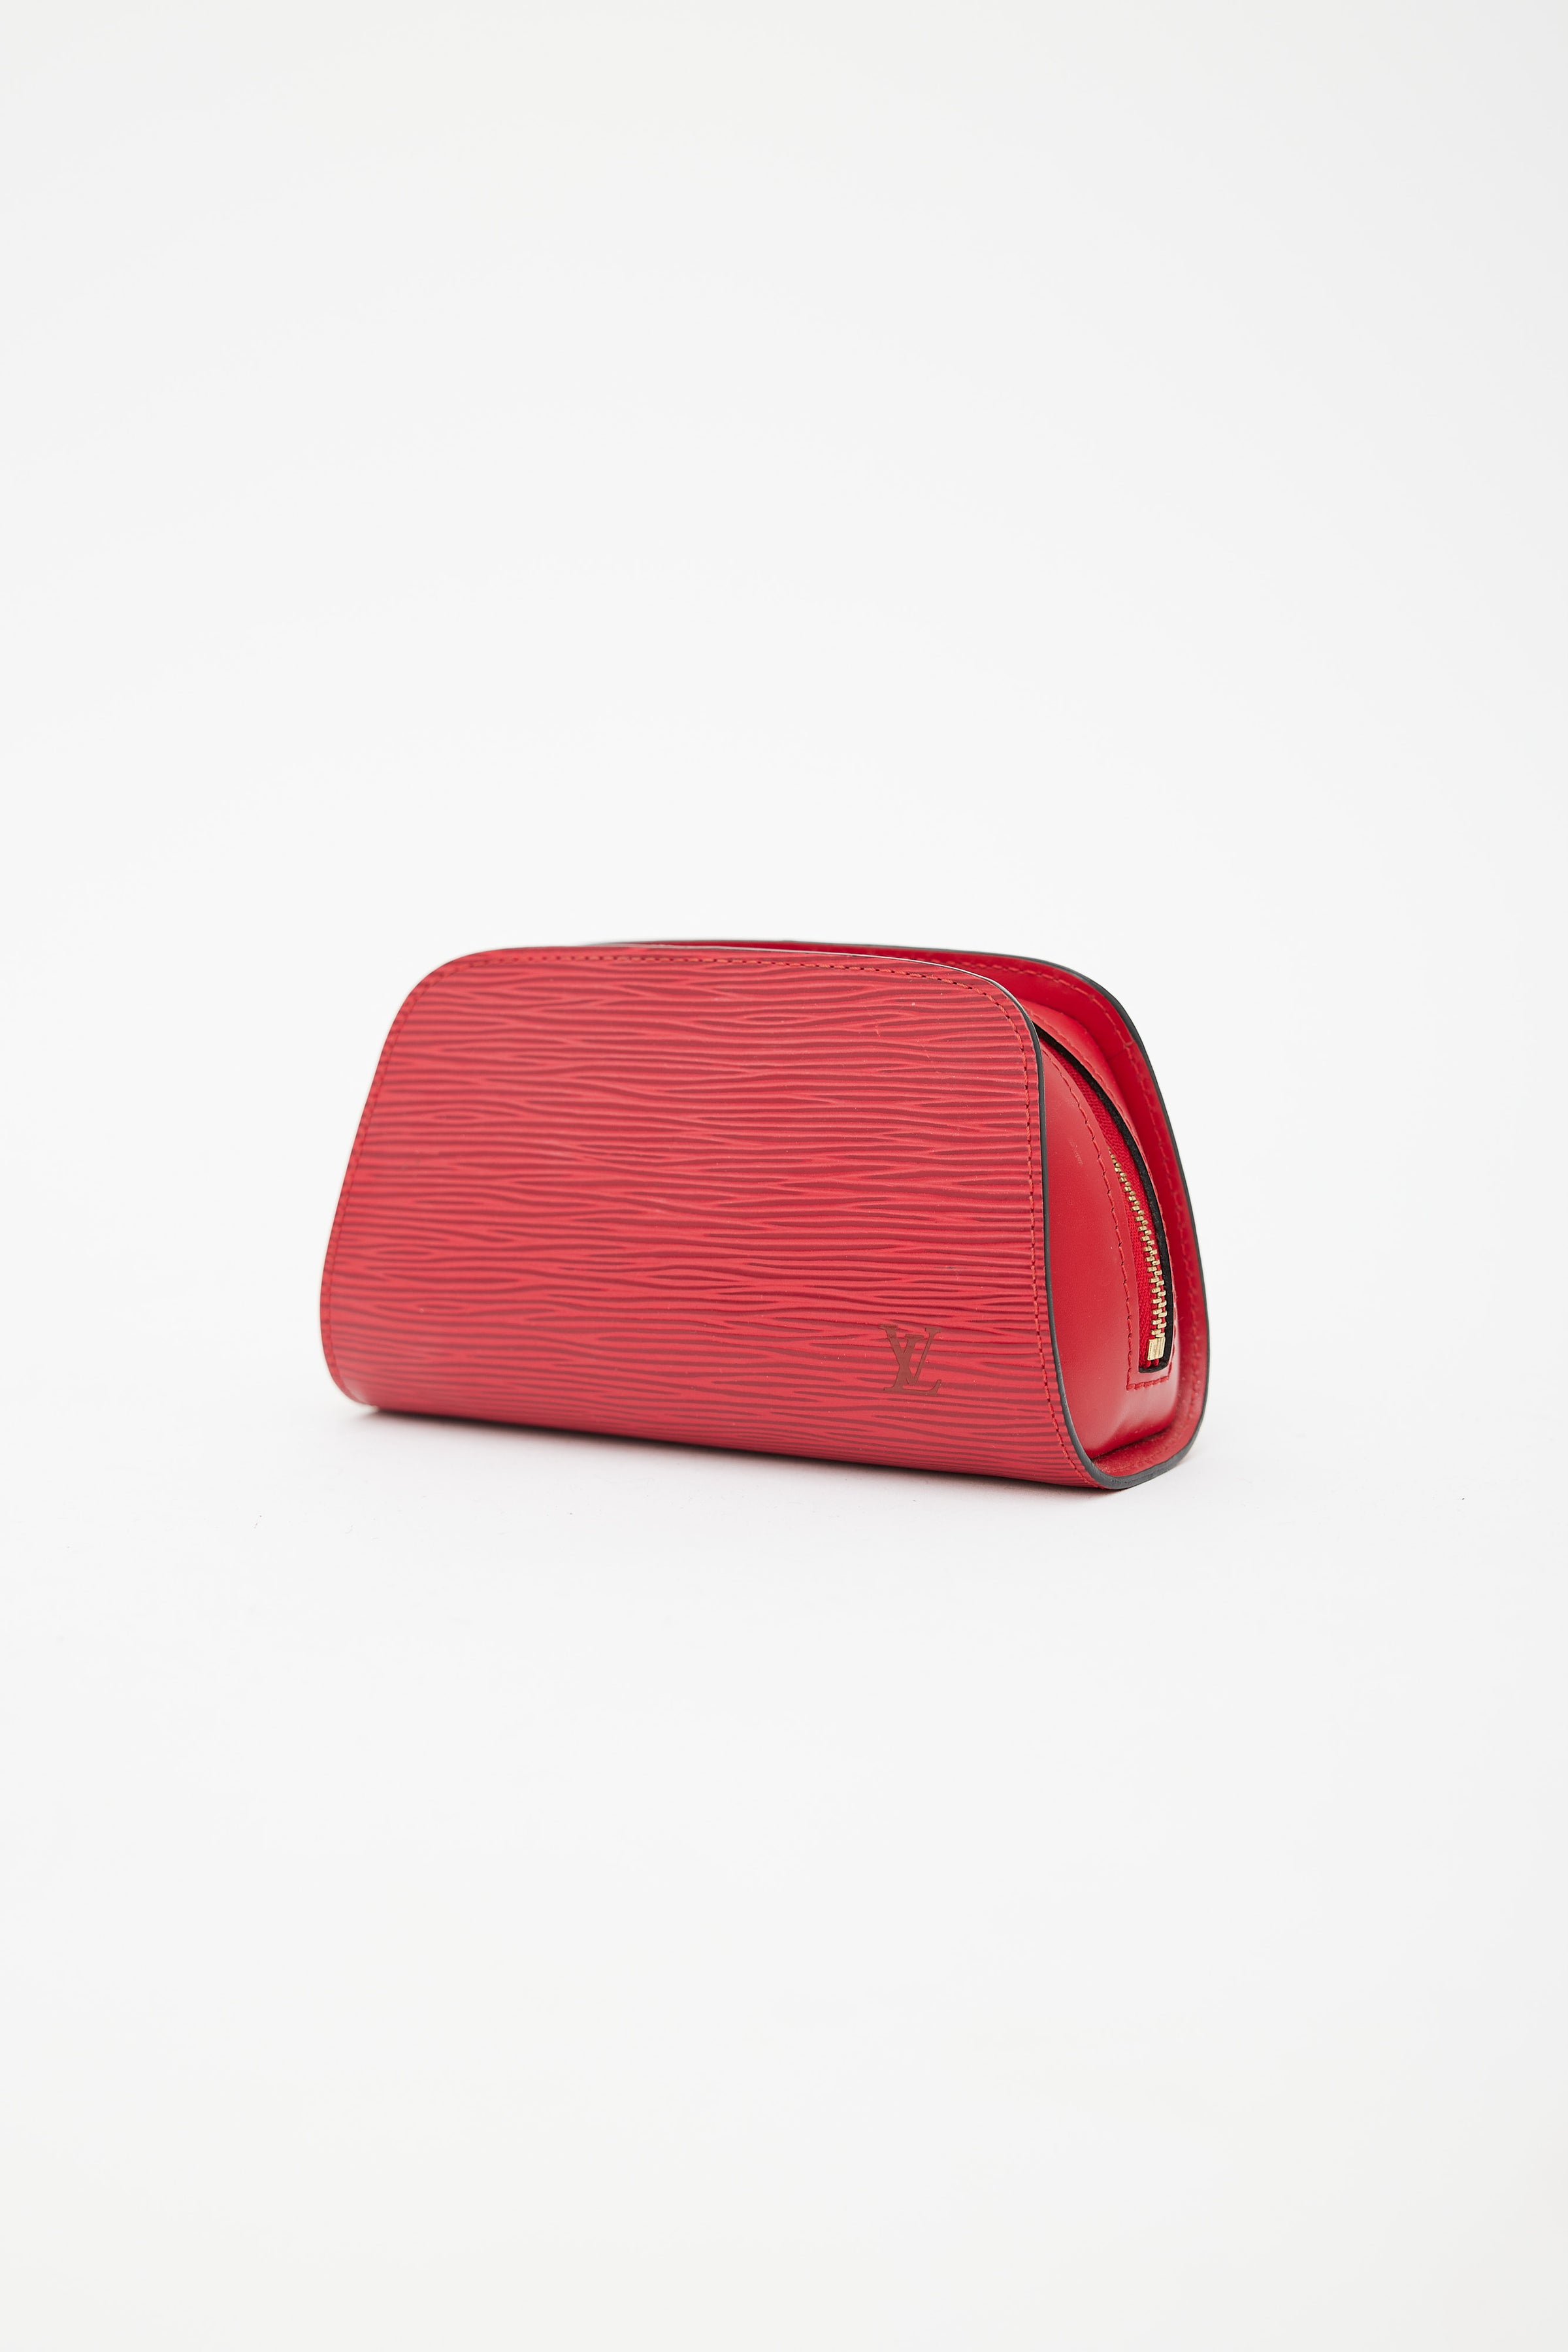 Louis Vuitton Red Patent Leather Pumps – Maidenlane Designer Consignment